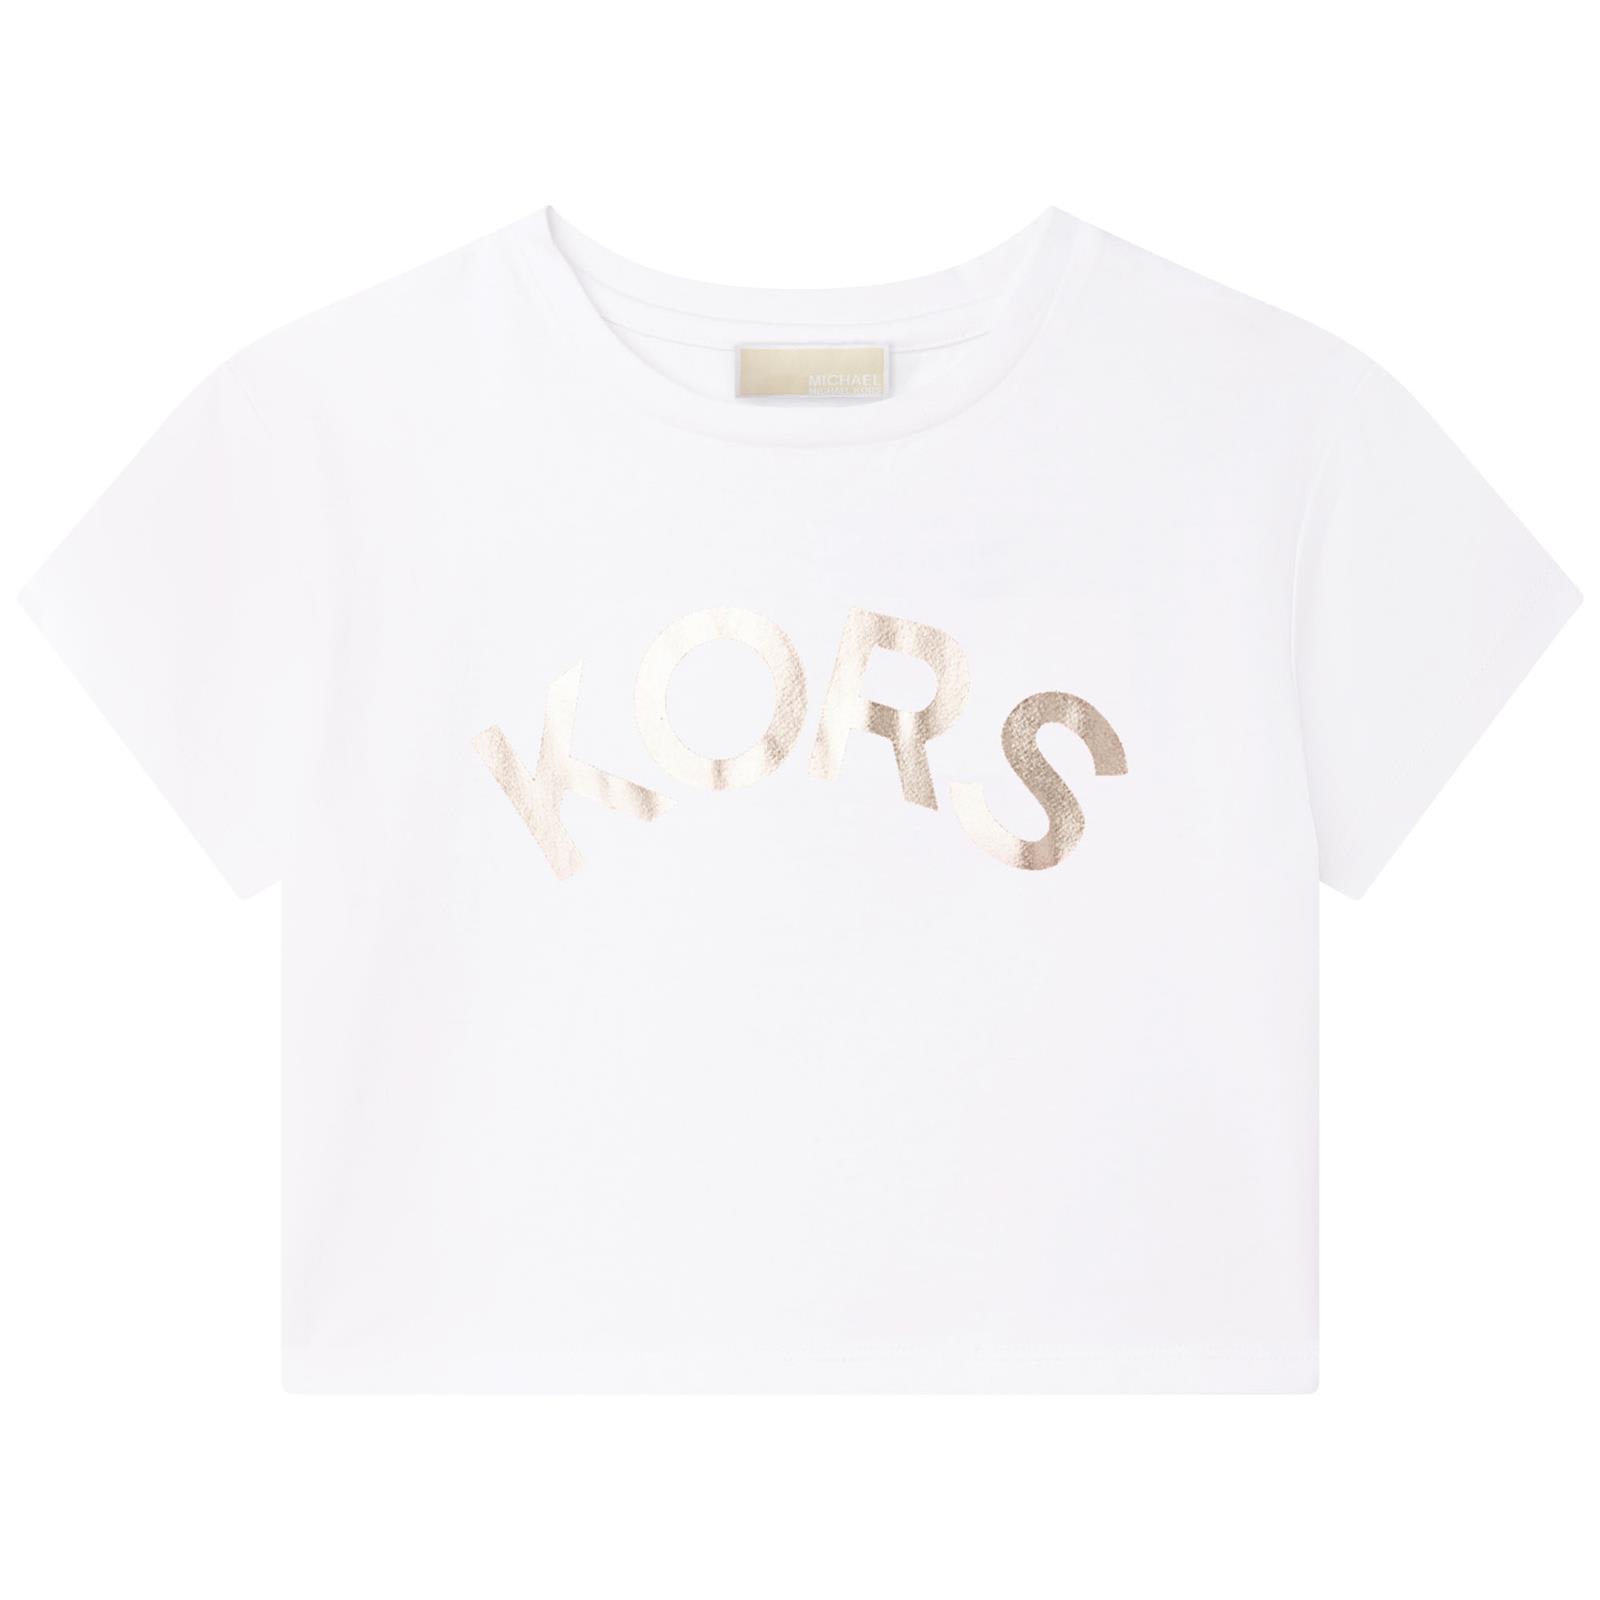 Michael Kors Printed T-shirt